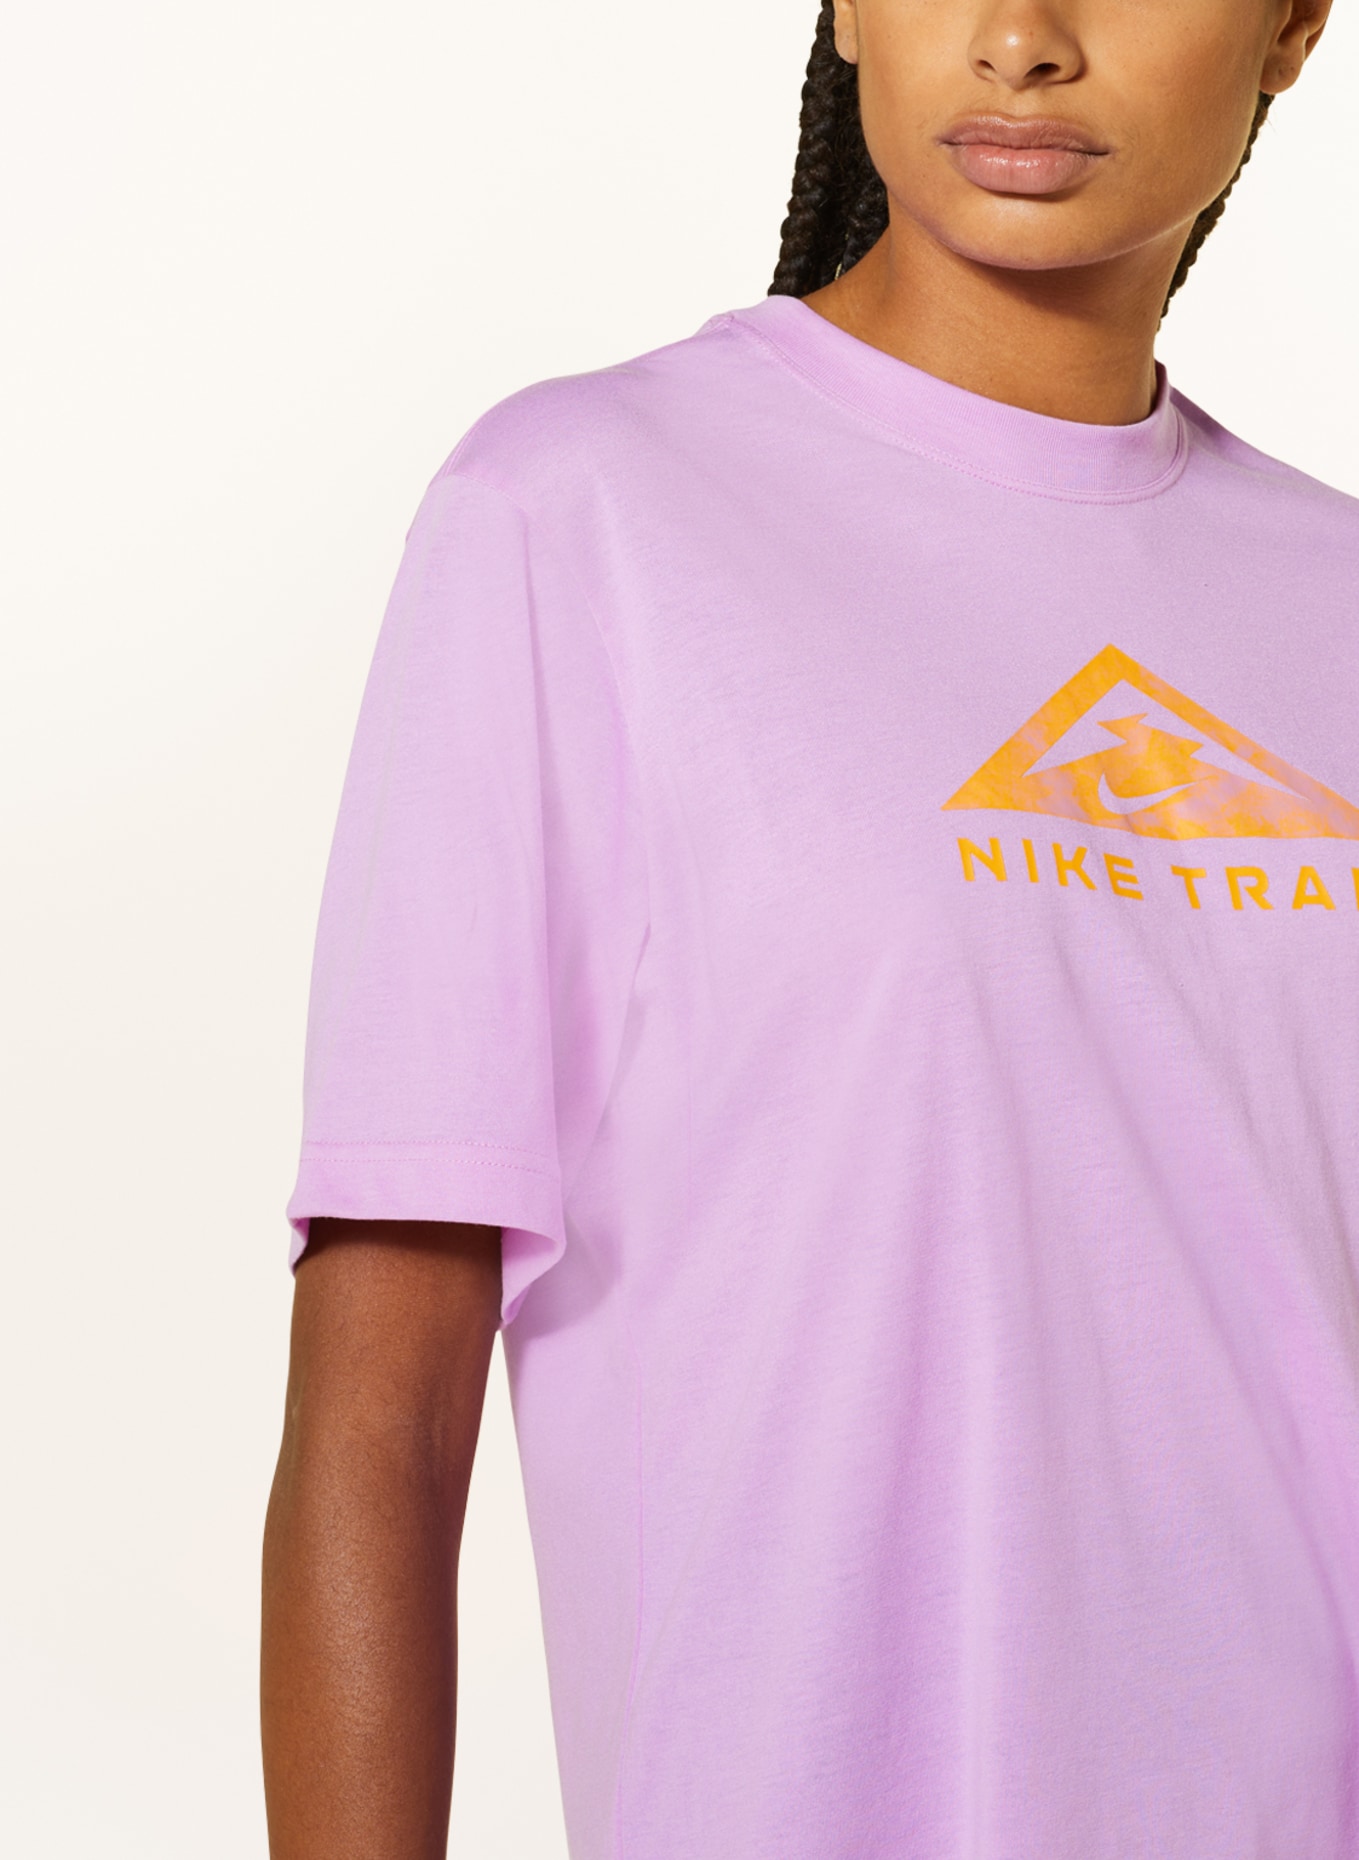 Nike DRI-FIT orange Laufshirt TRAIL in helllila/